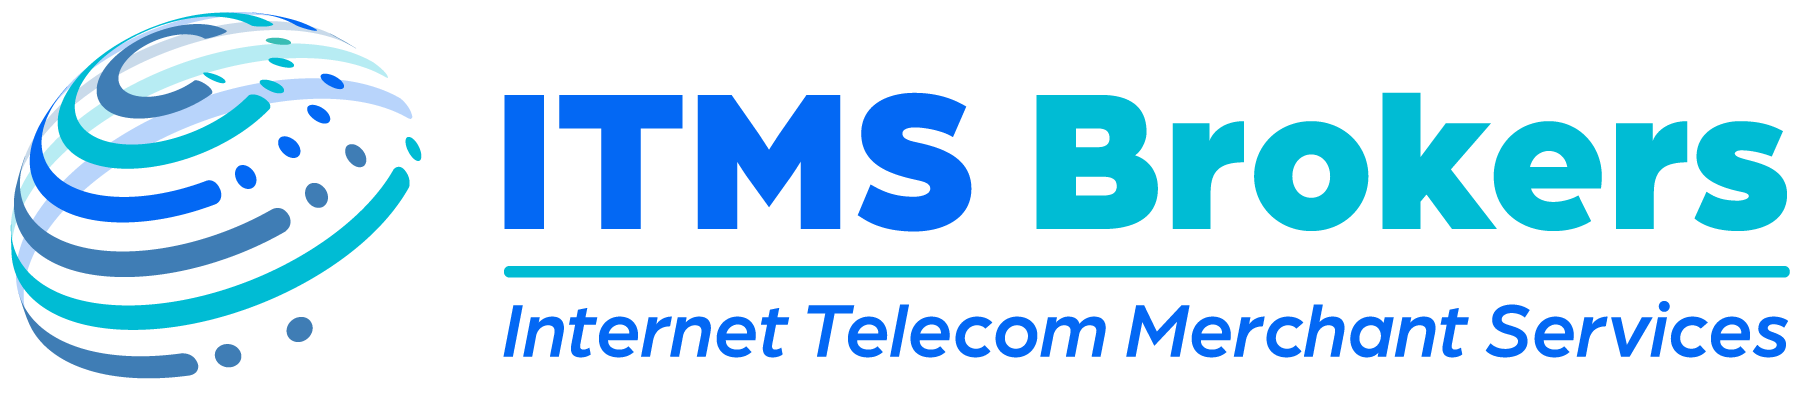 ITMS (Internet, Telecom & Merchant Services) Brokers